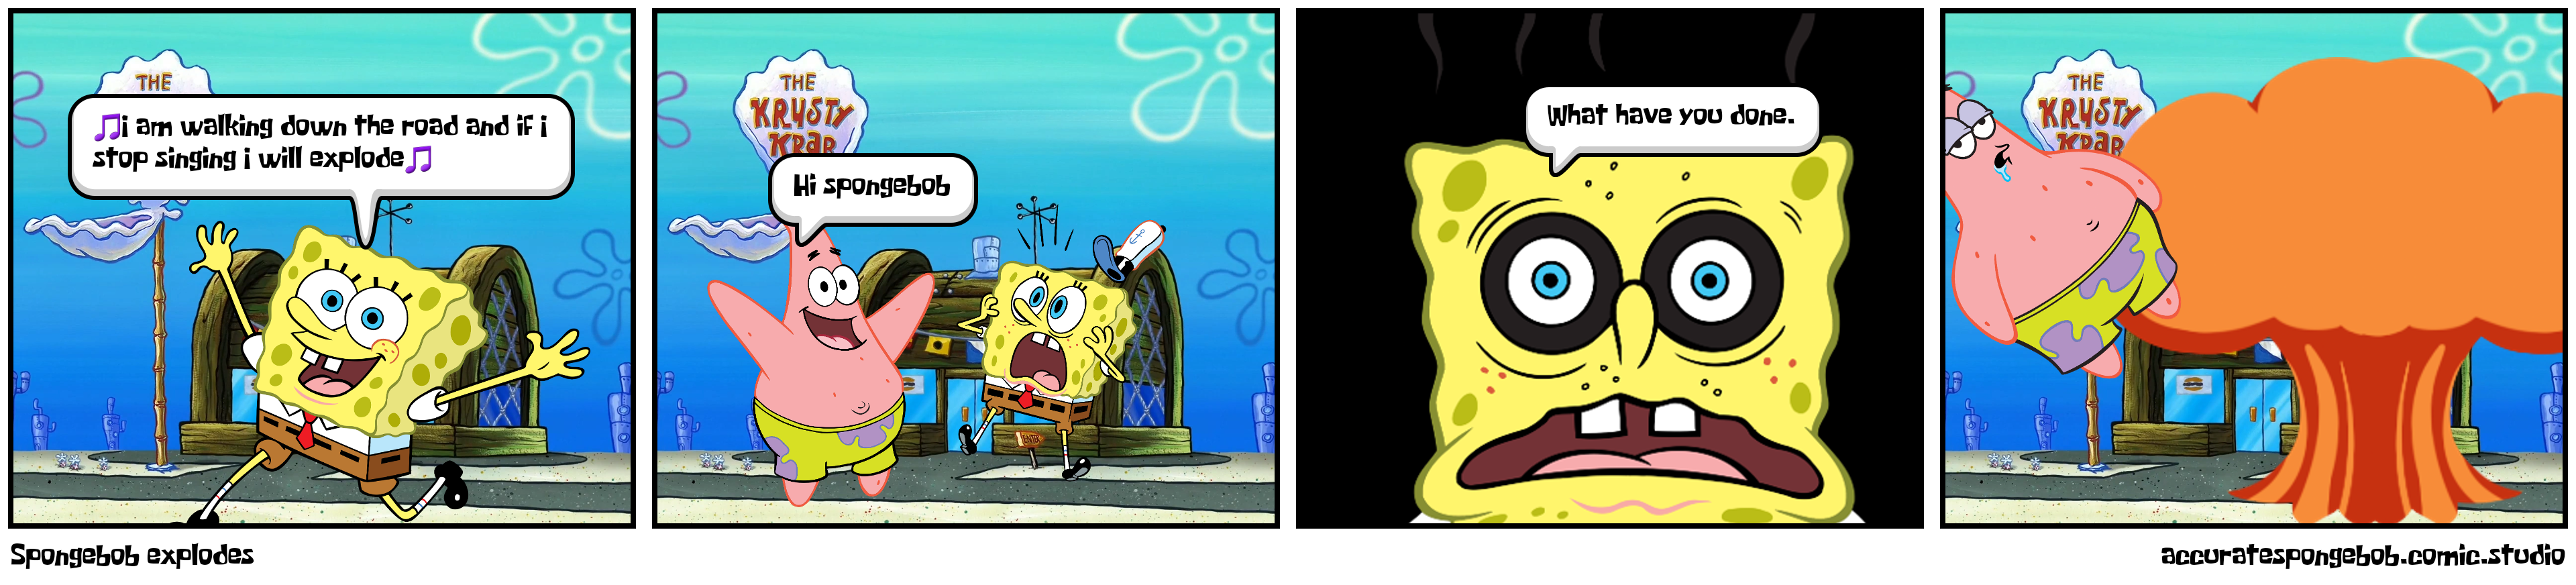 Spongebob explodes